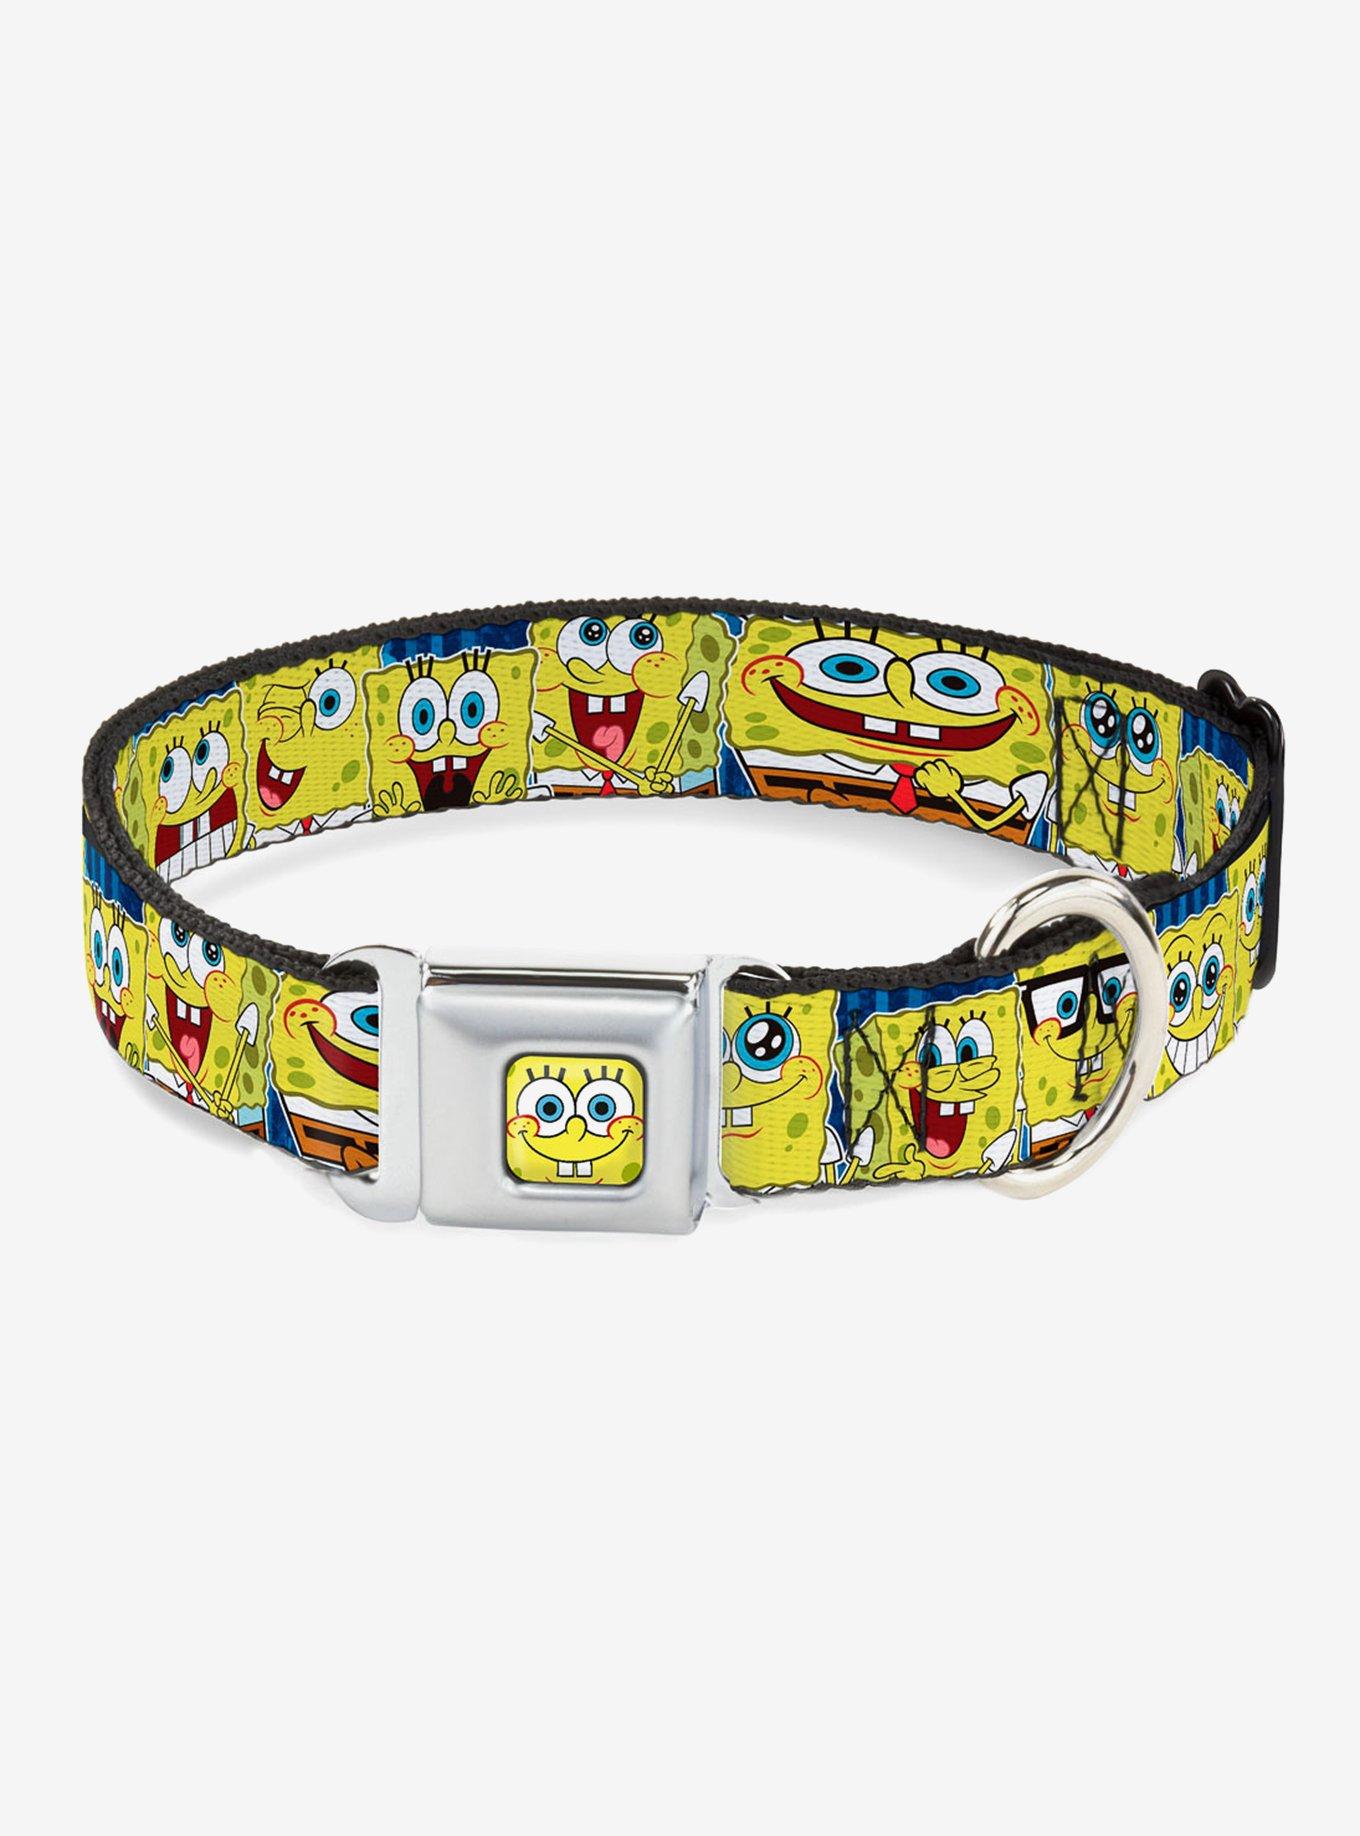 Spongebob Squarepants Expressions Dog Collar Seatbelt Buckle | BoxLunch